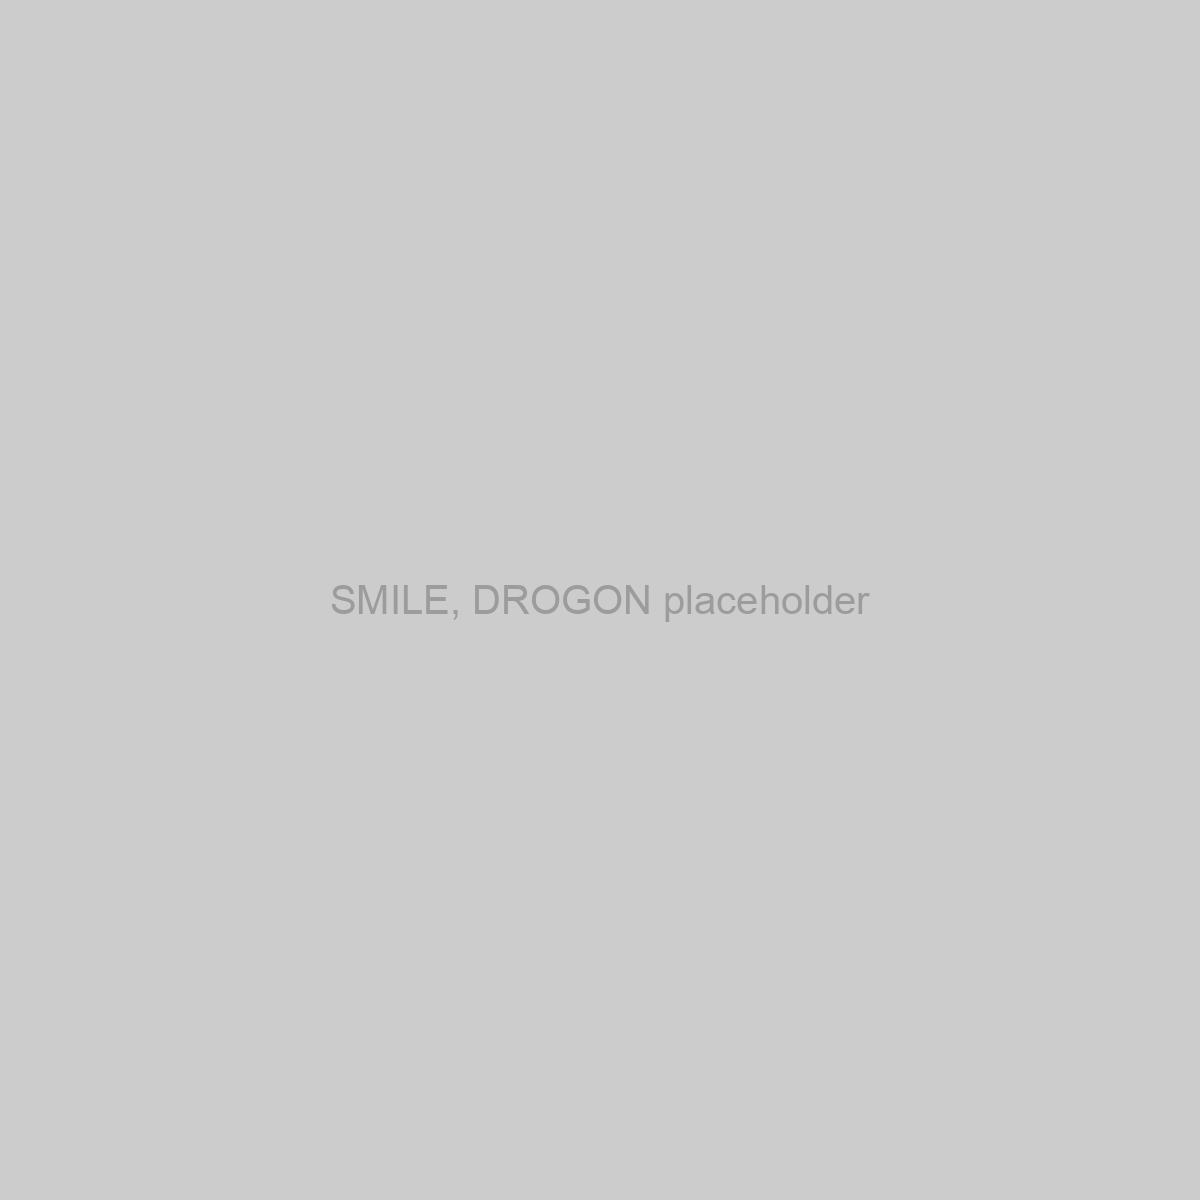 SMILE, DROGON Placeholder Image